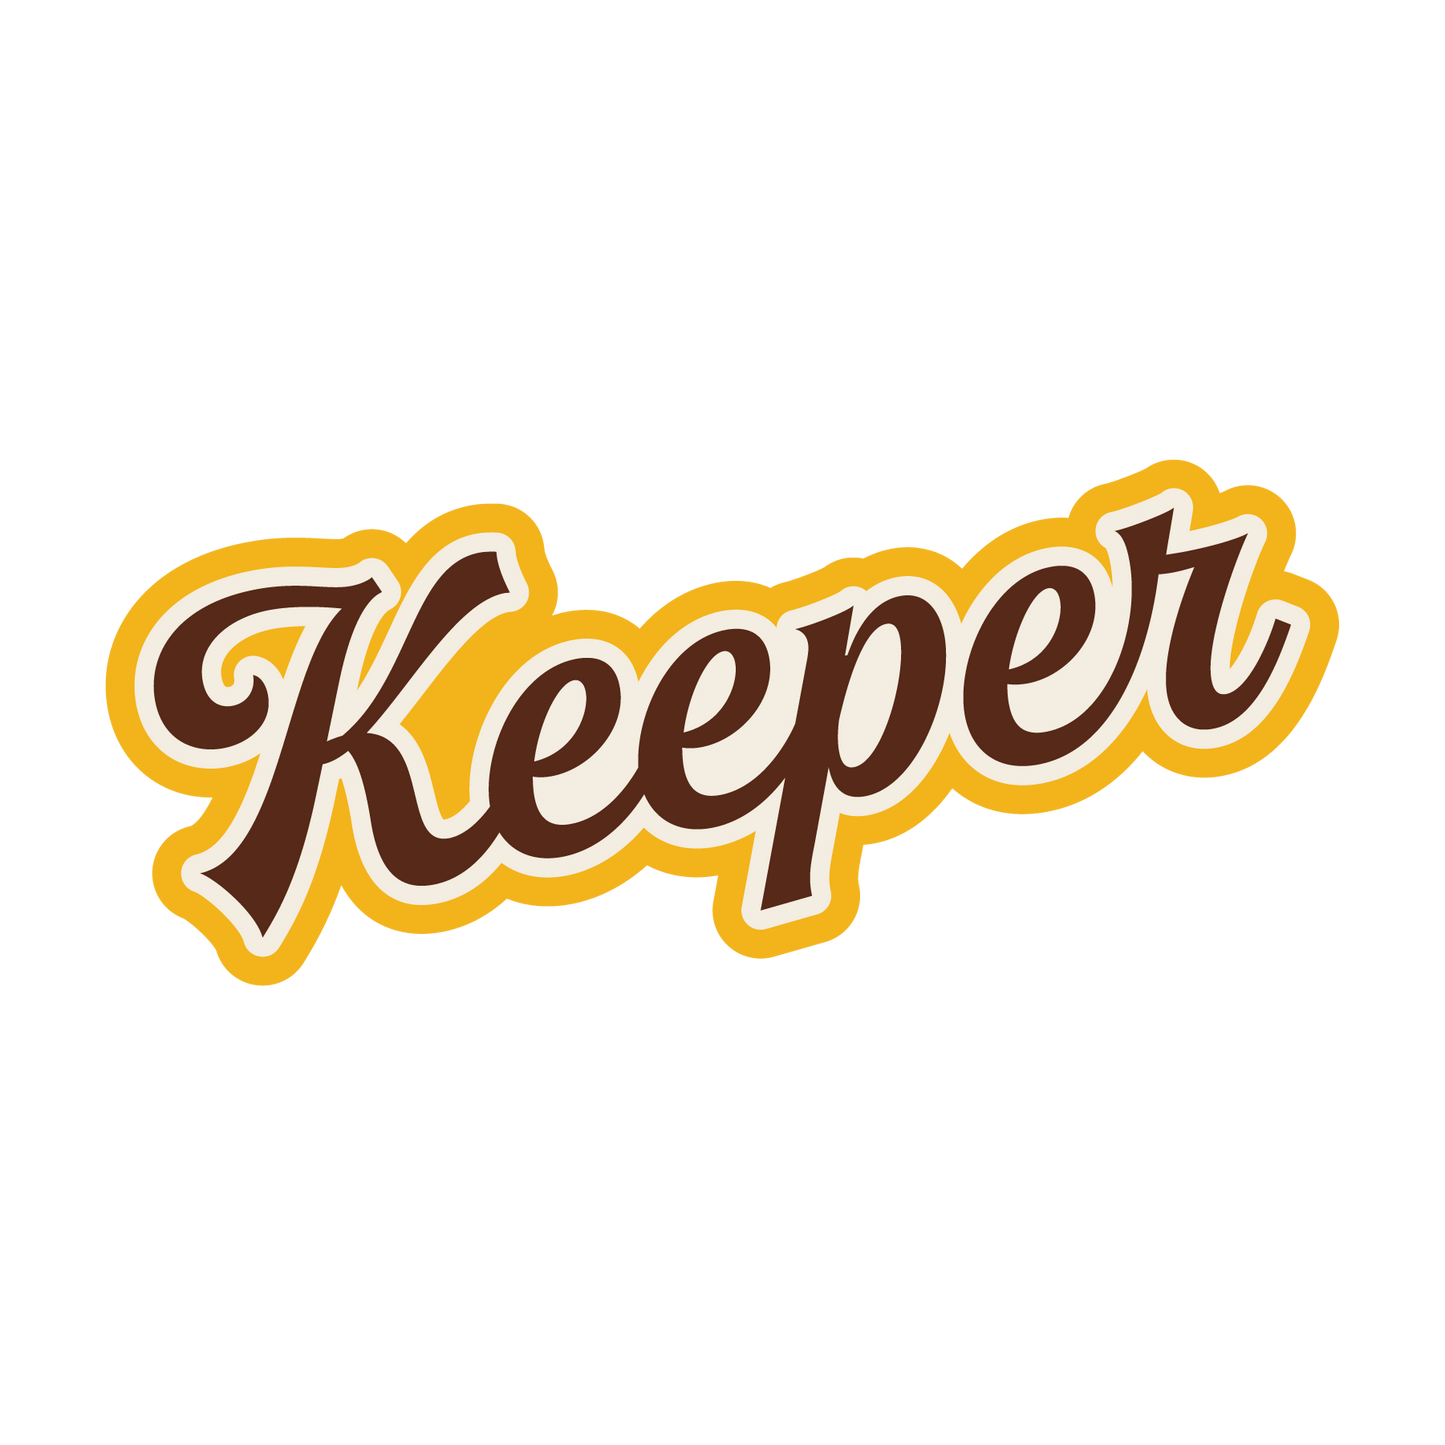 Keeper Sticker